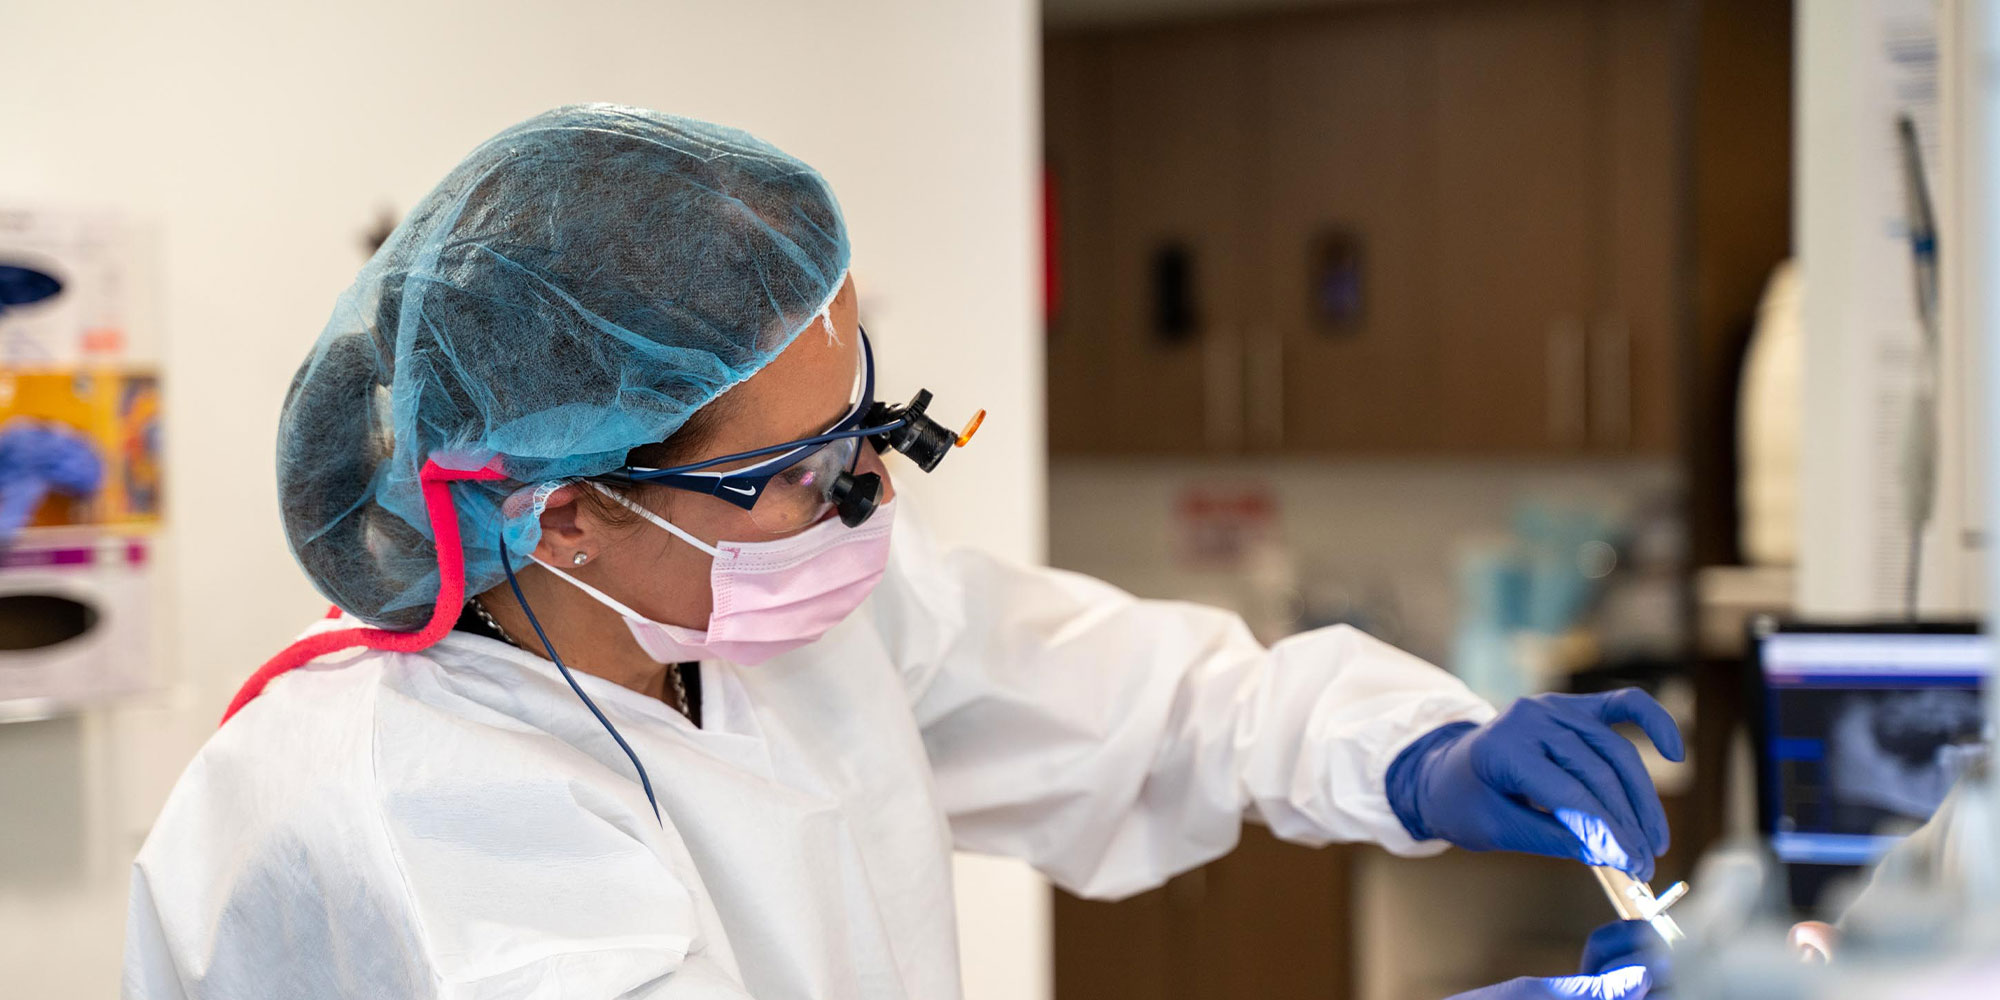 Dr. Theresa Salem placing implants